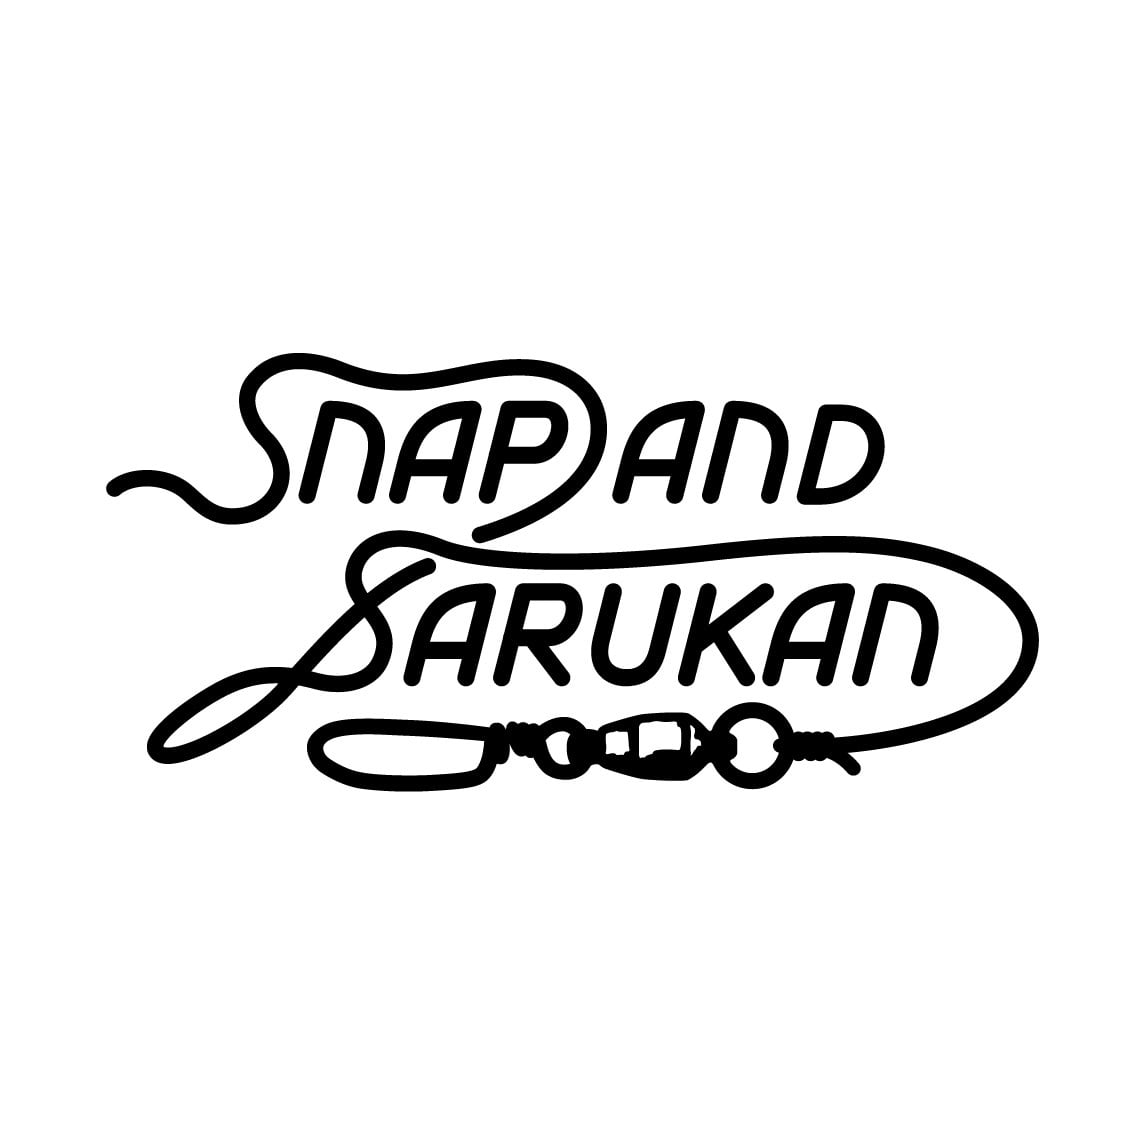 SNAP AND SARUKAN